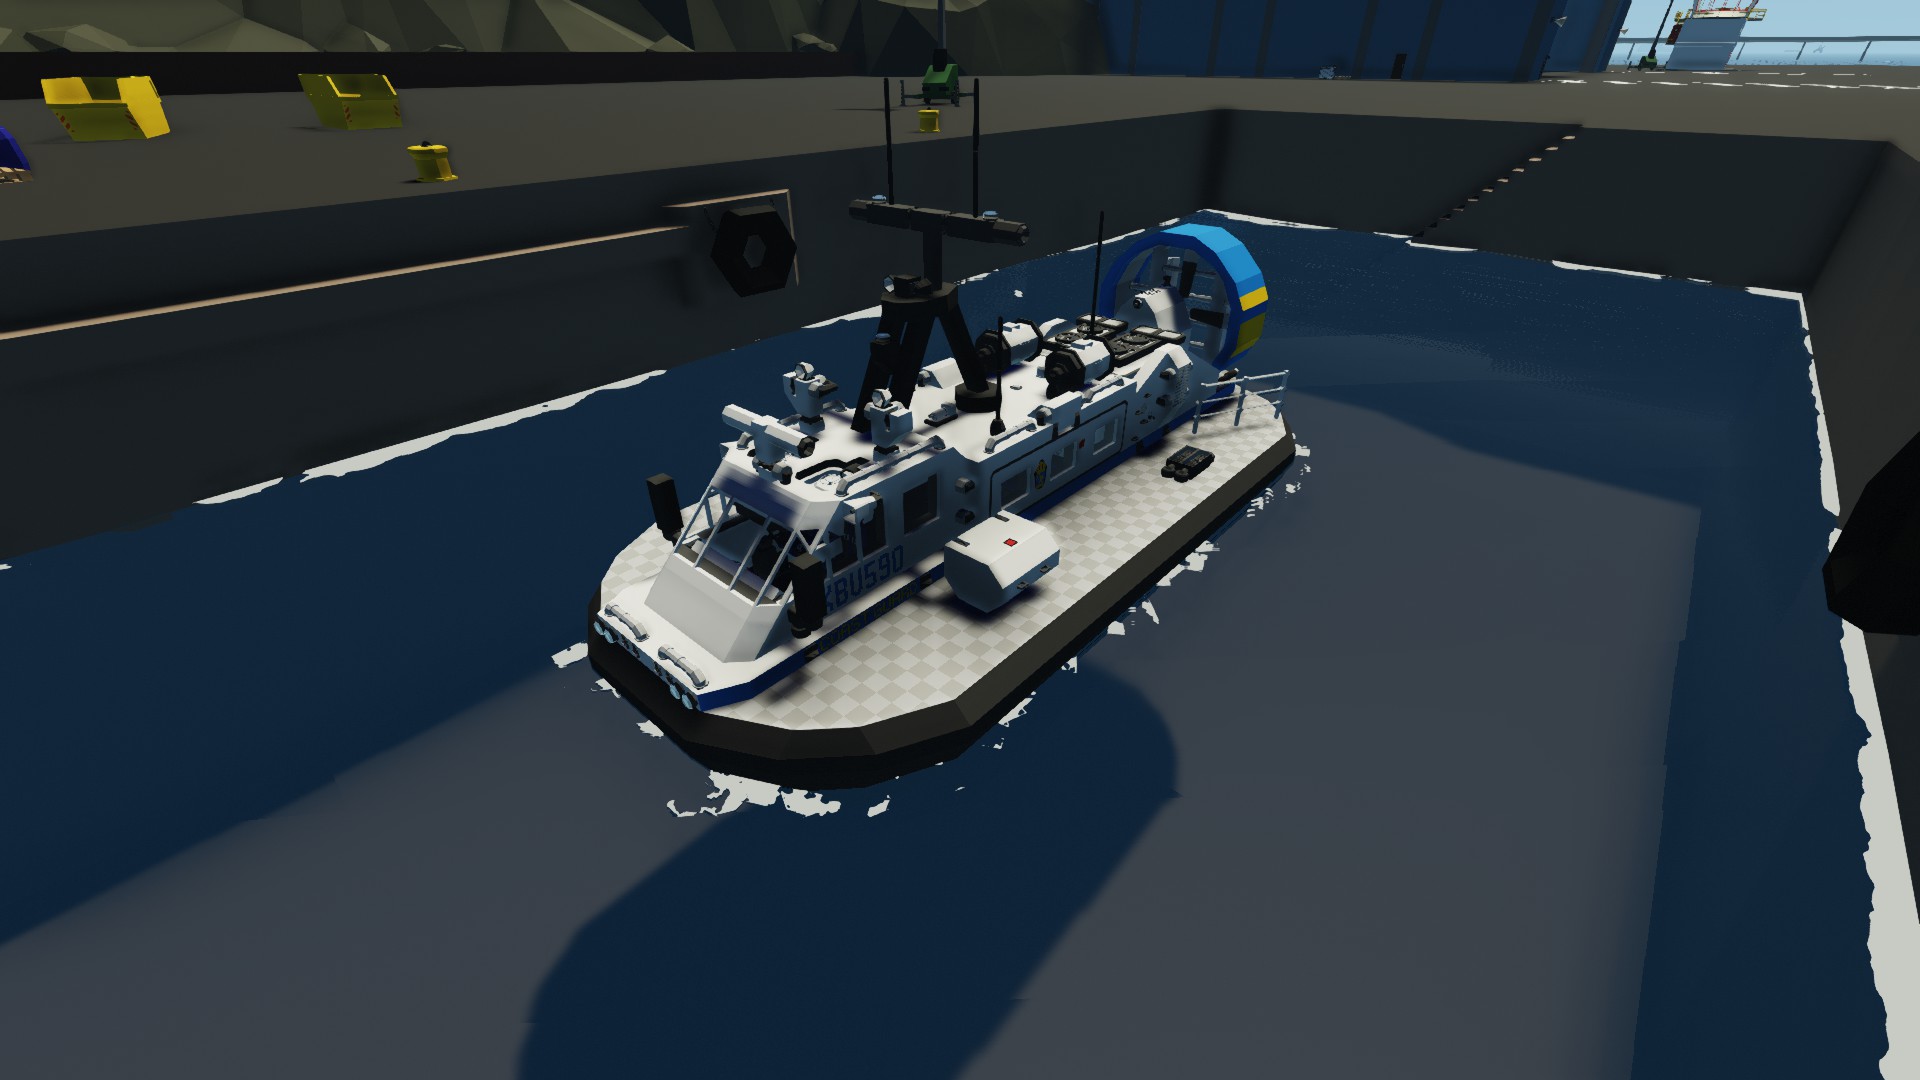 Basic Boat Equipment